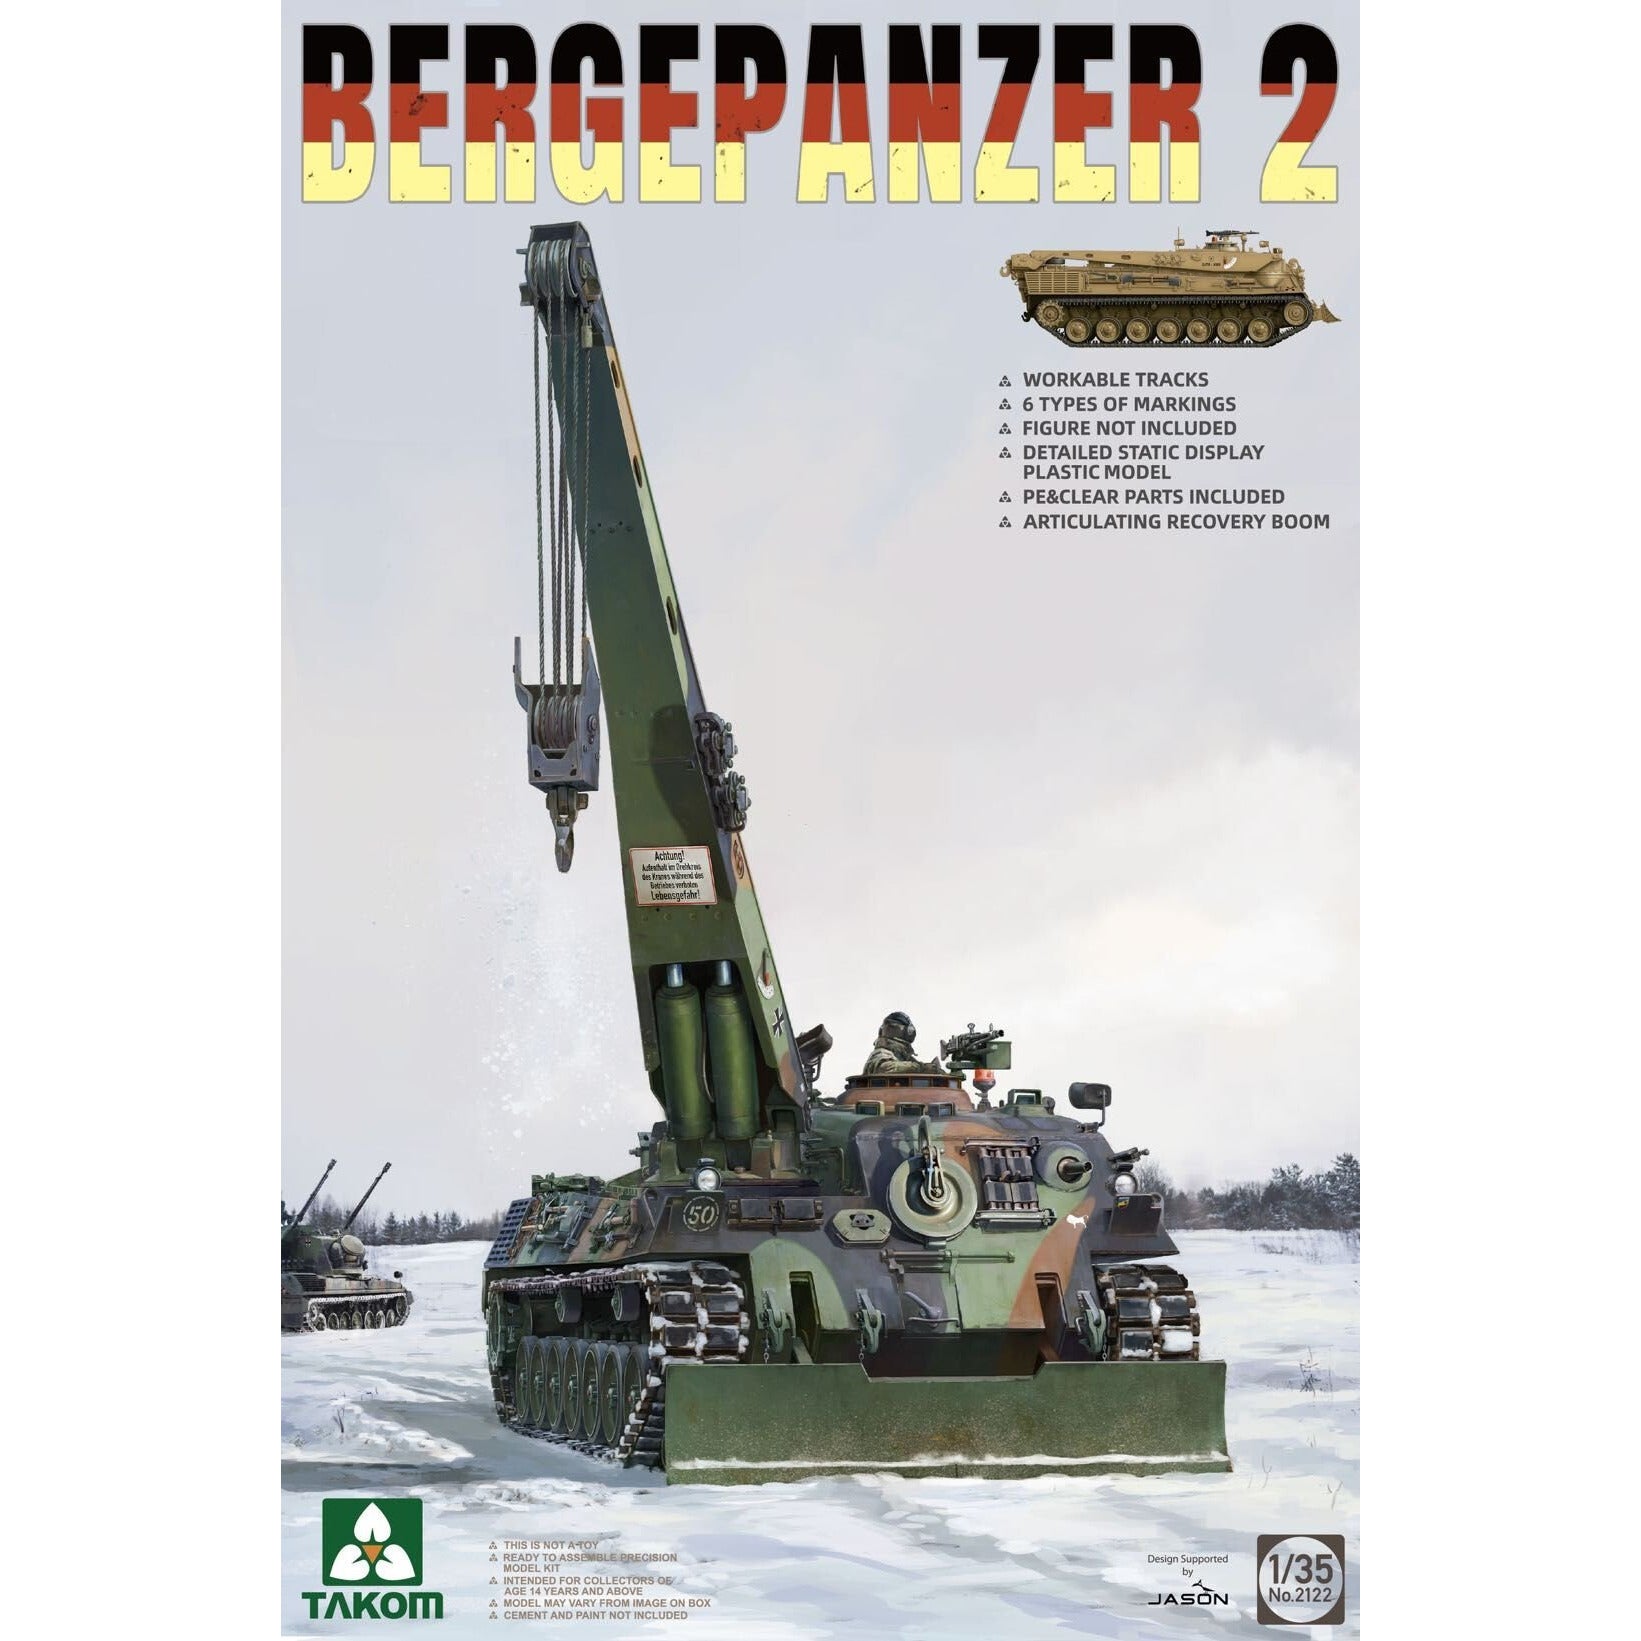 Bergepanzer 2 1/35 by Takom